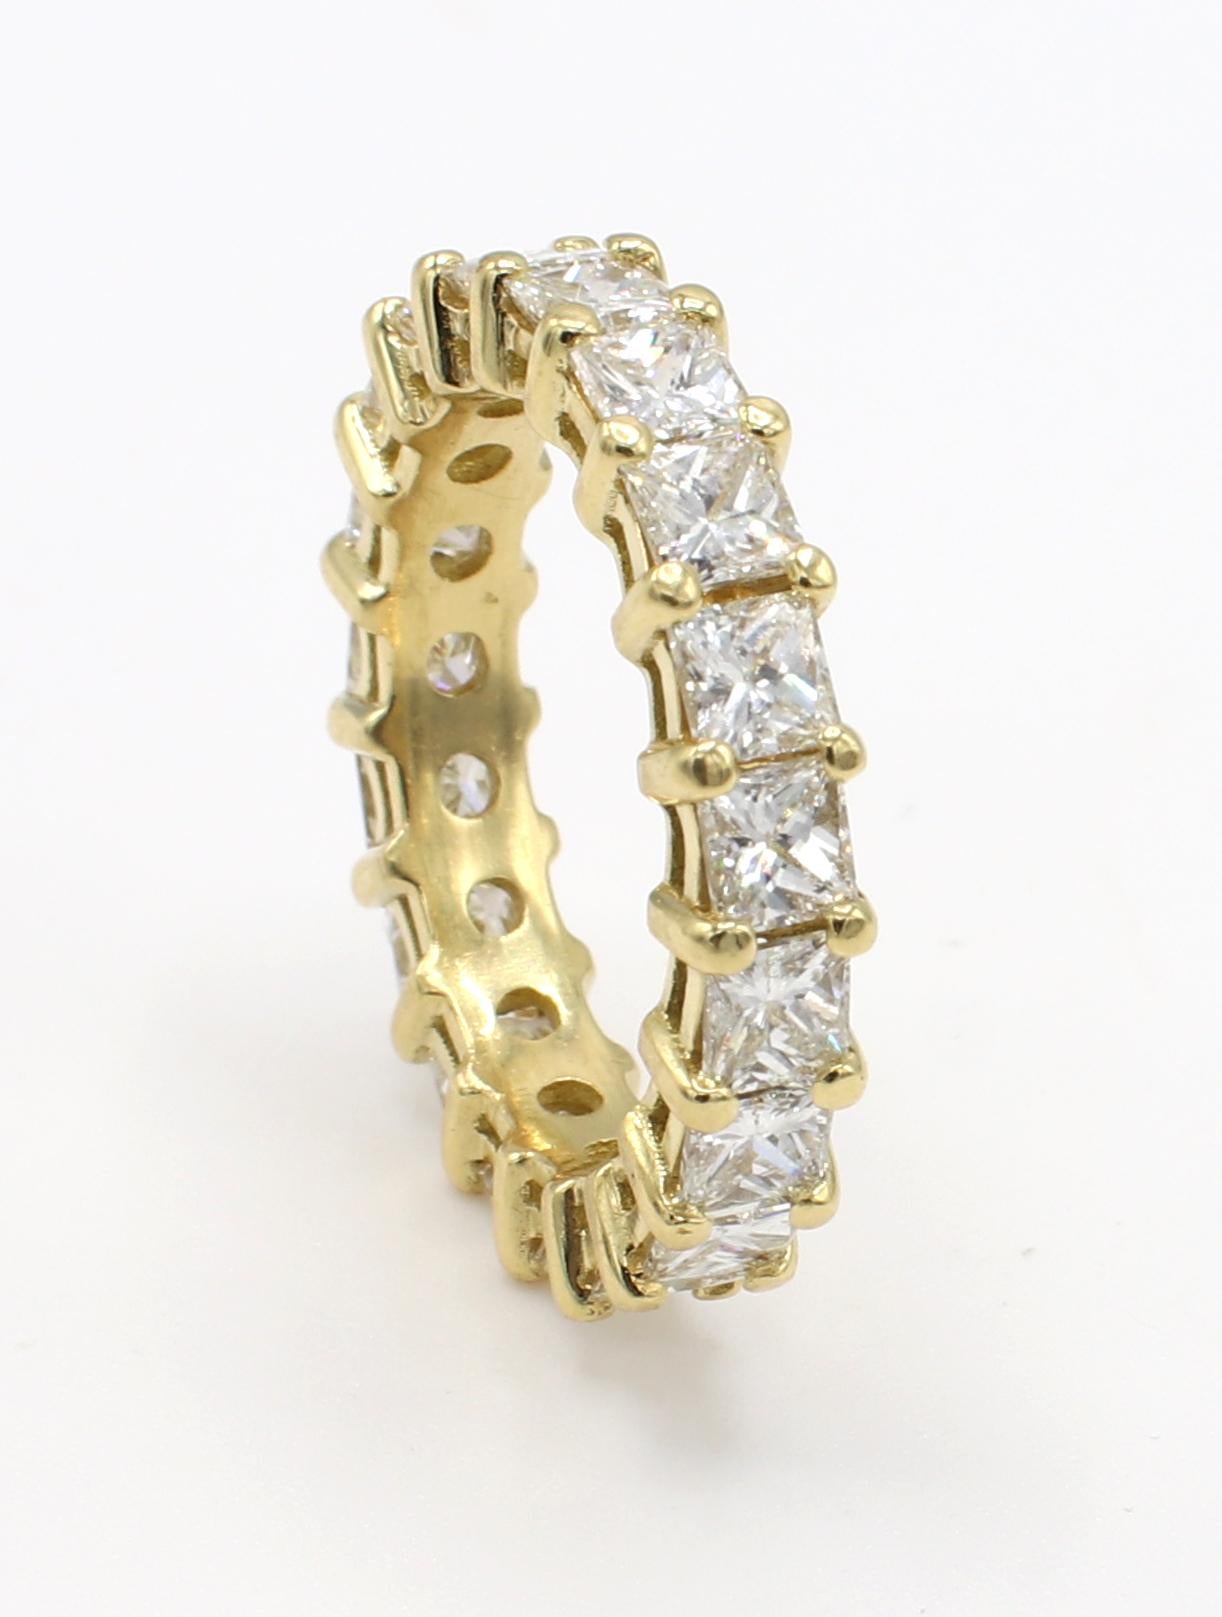 18 Karat Yellow Gold 2.30 Carat Princess Cut Diamond Eternity Band Ring Size 4.75
Metal: 18k yellow gold
Weight: 3.72 grams
Diamonds: 19 princess cut diamonds, approx. 2.30 CTW G-H VS 
Size: 4.75 (US)
Width: 4MM
